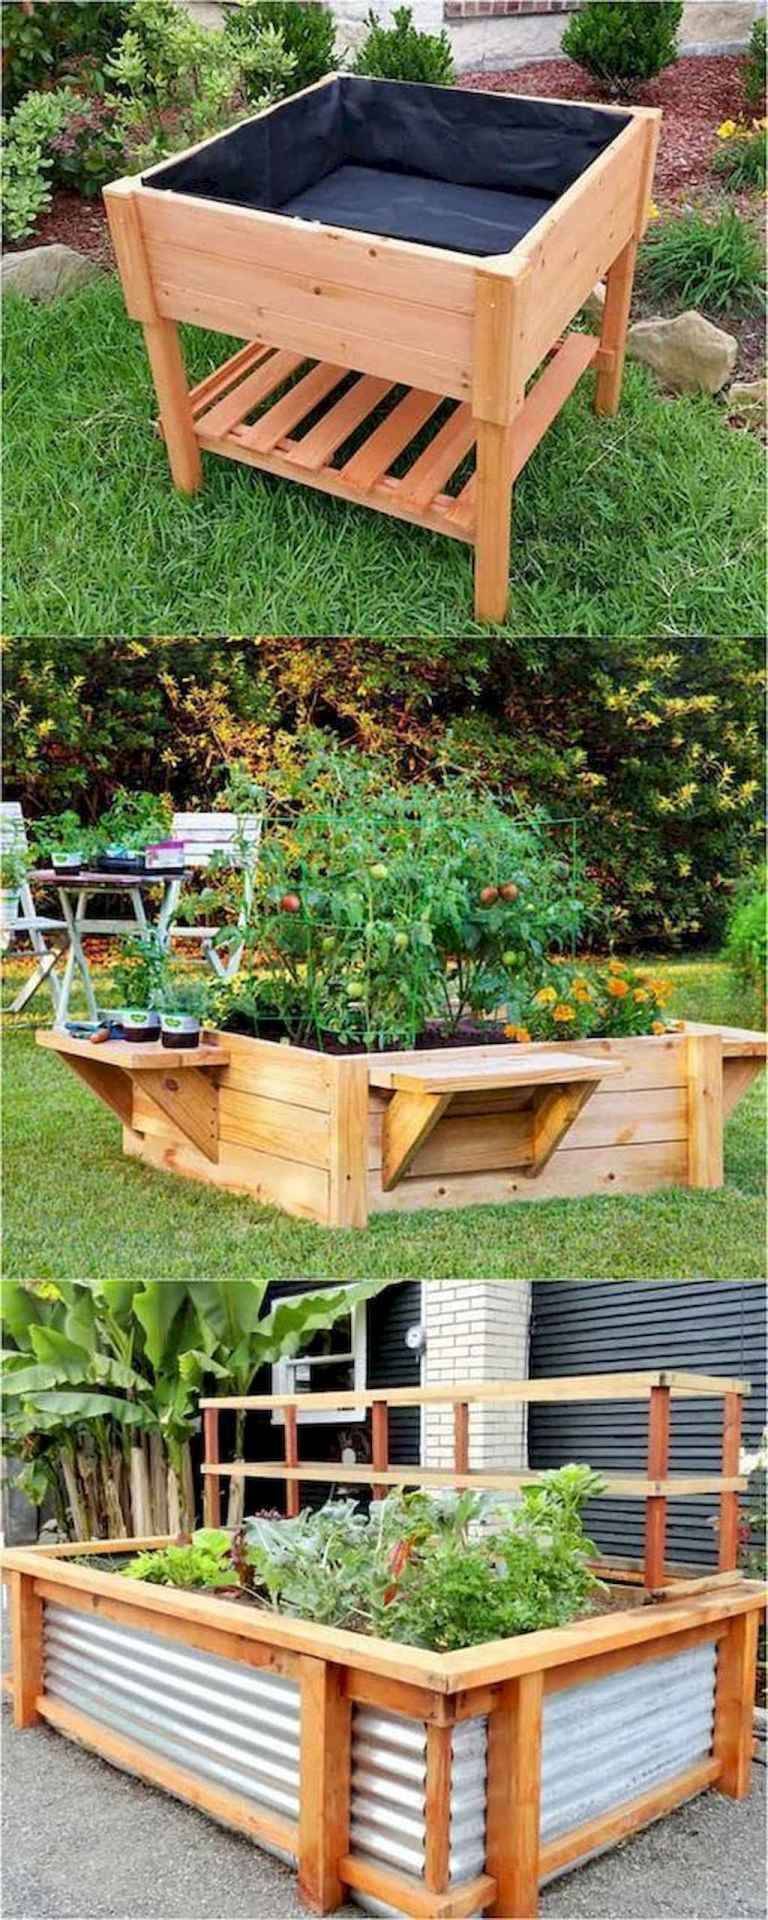 Simple Diy Vegetable Garden Small Spaces